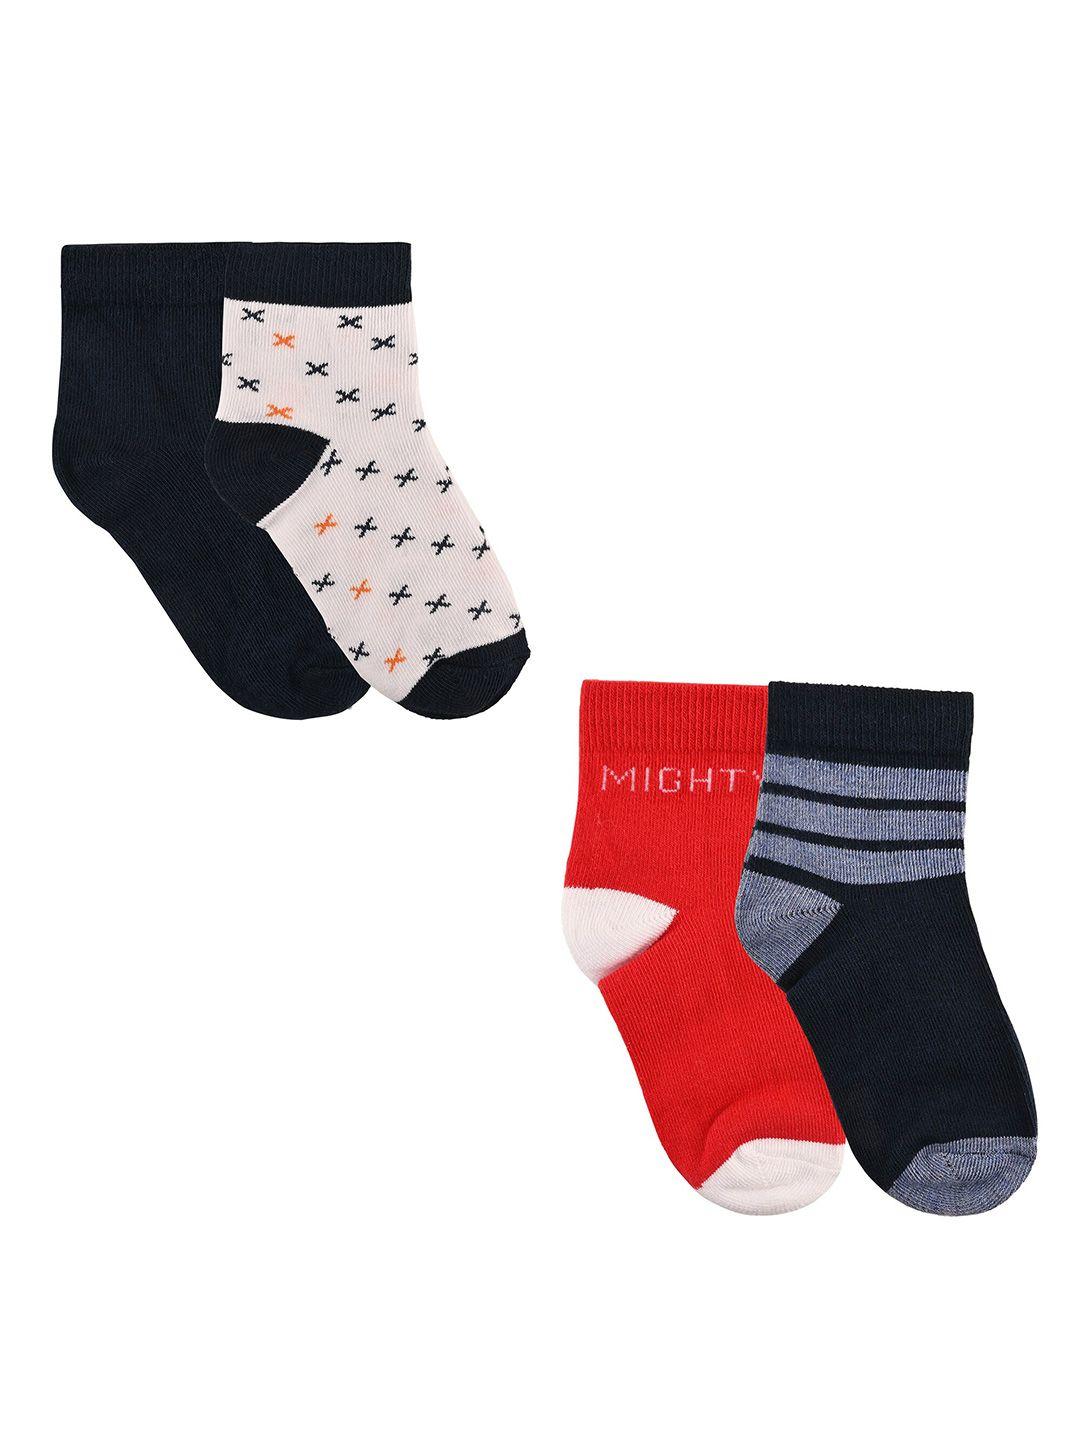 nuluv boys set of 4 ankle length cotton socks